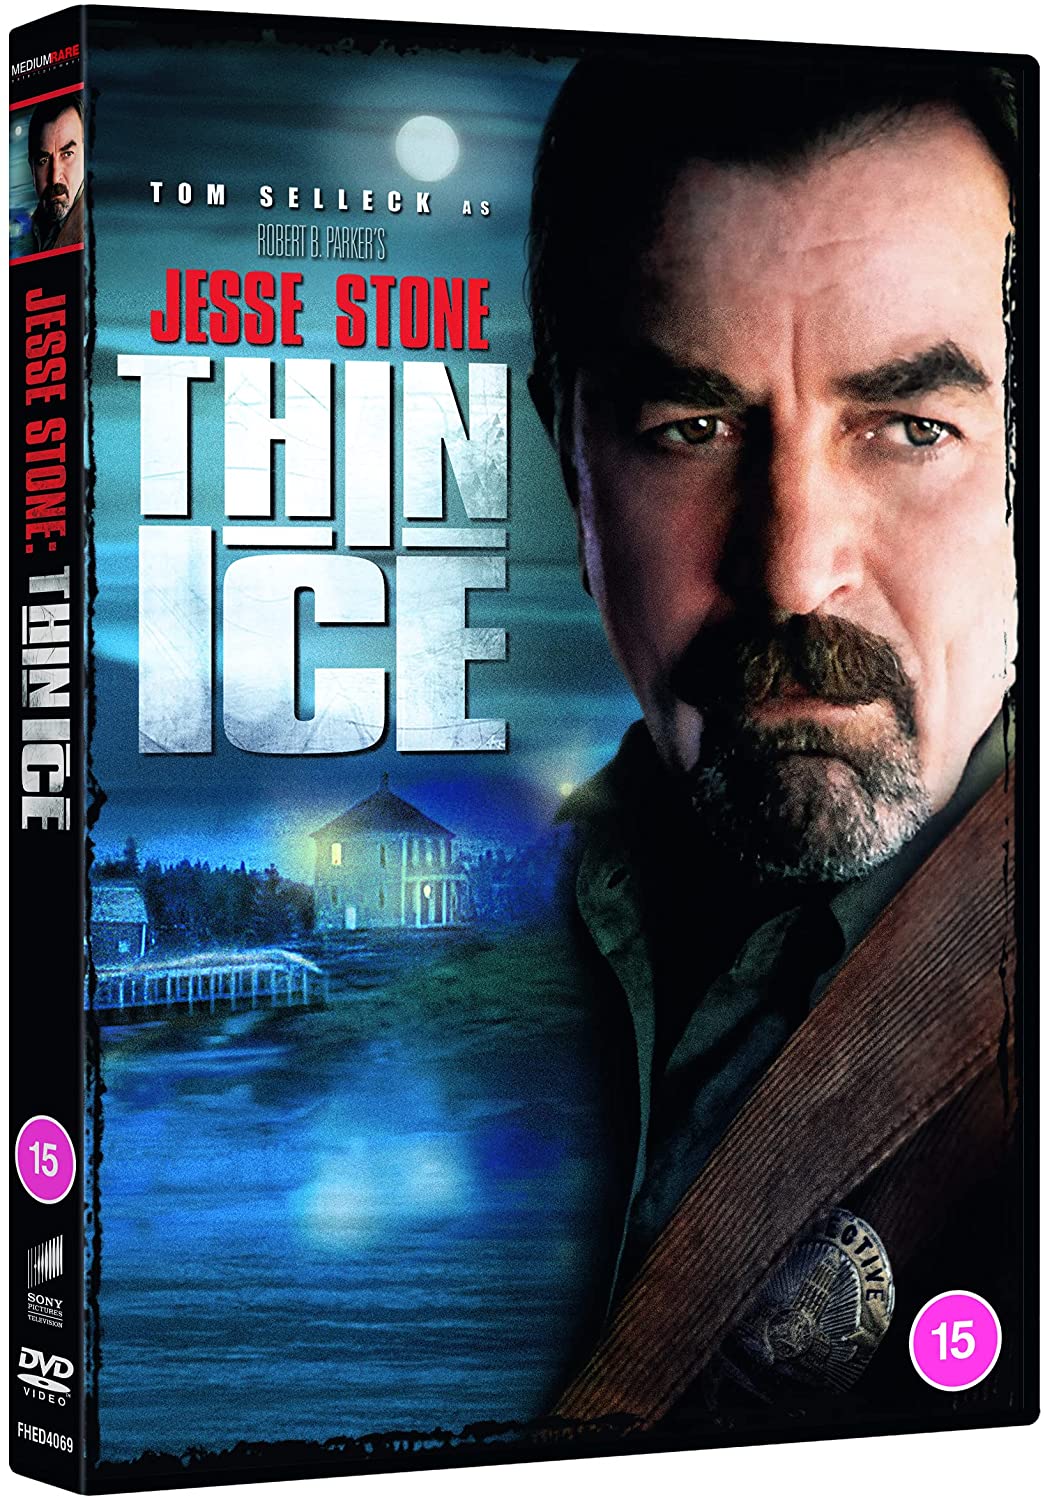 Jesse Stone: Thin Ice [2009] - Adaptation/Television [DVD]